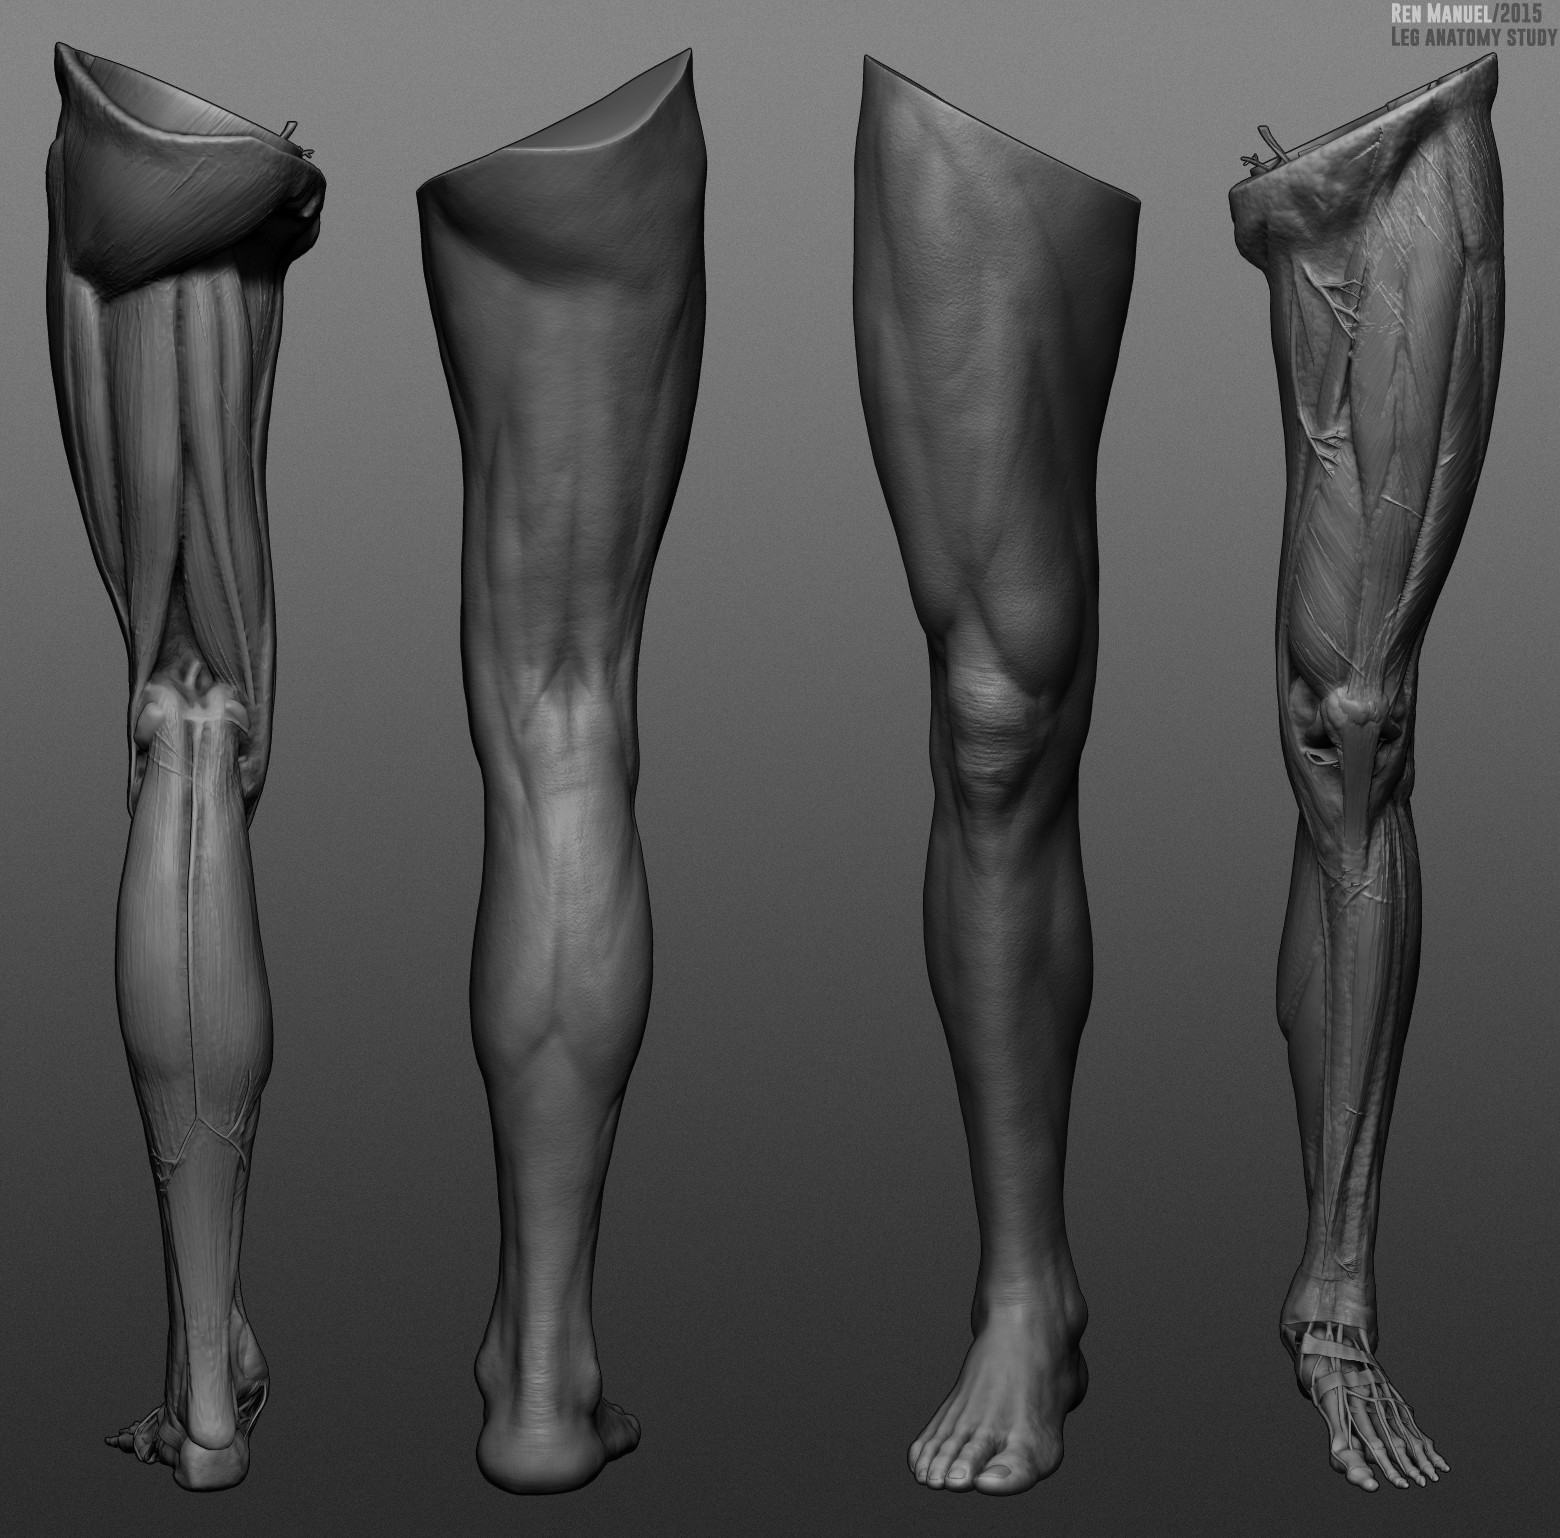 ArtStation - Leg anatomy study., Ren Manuel